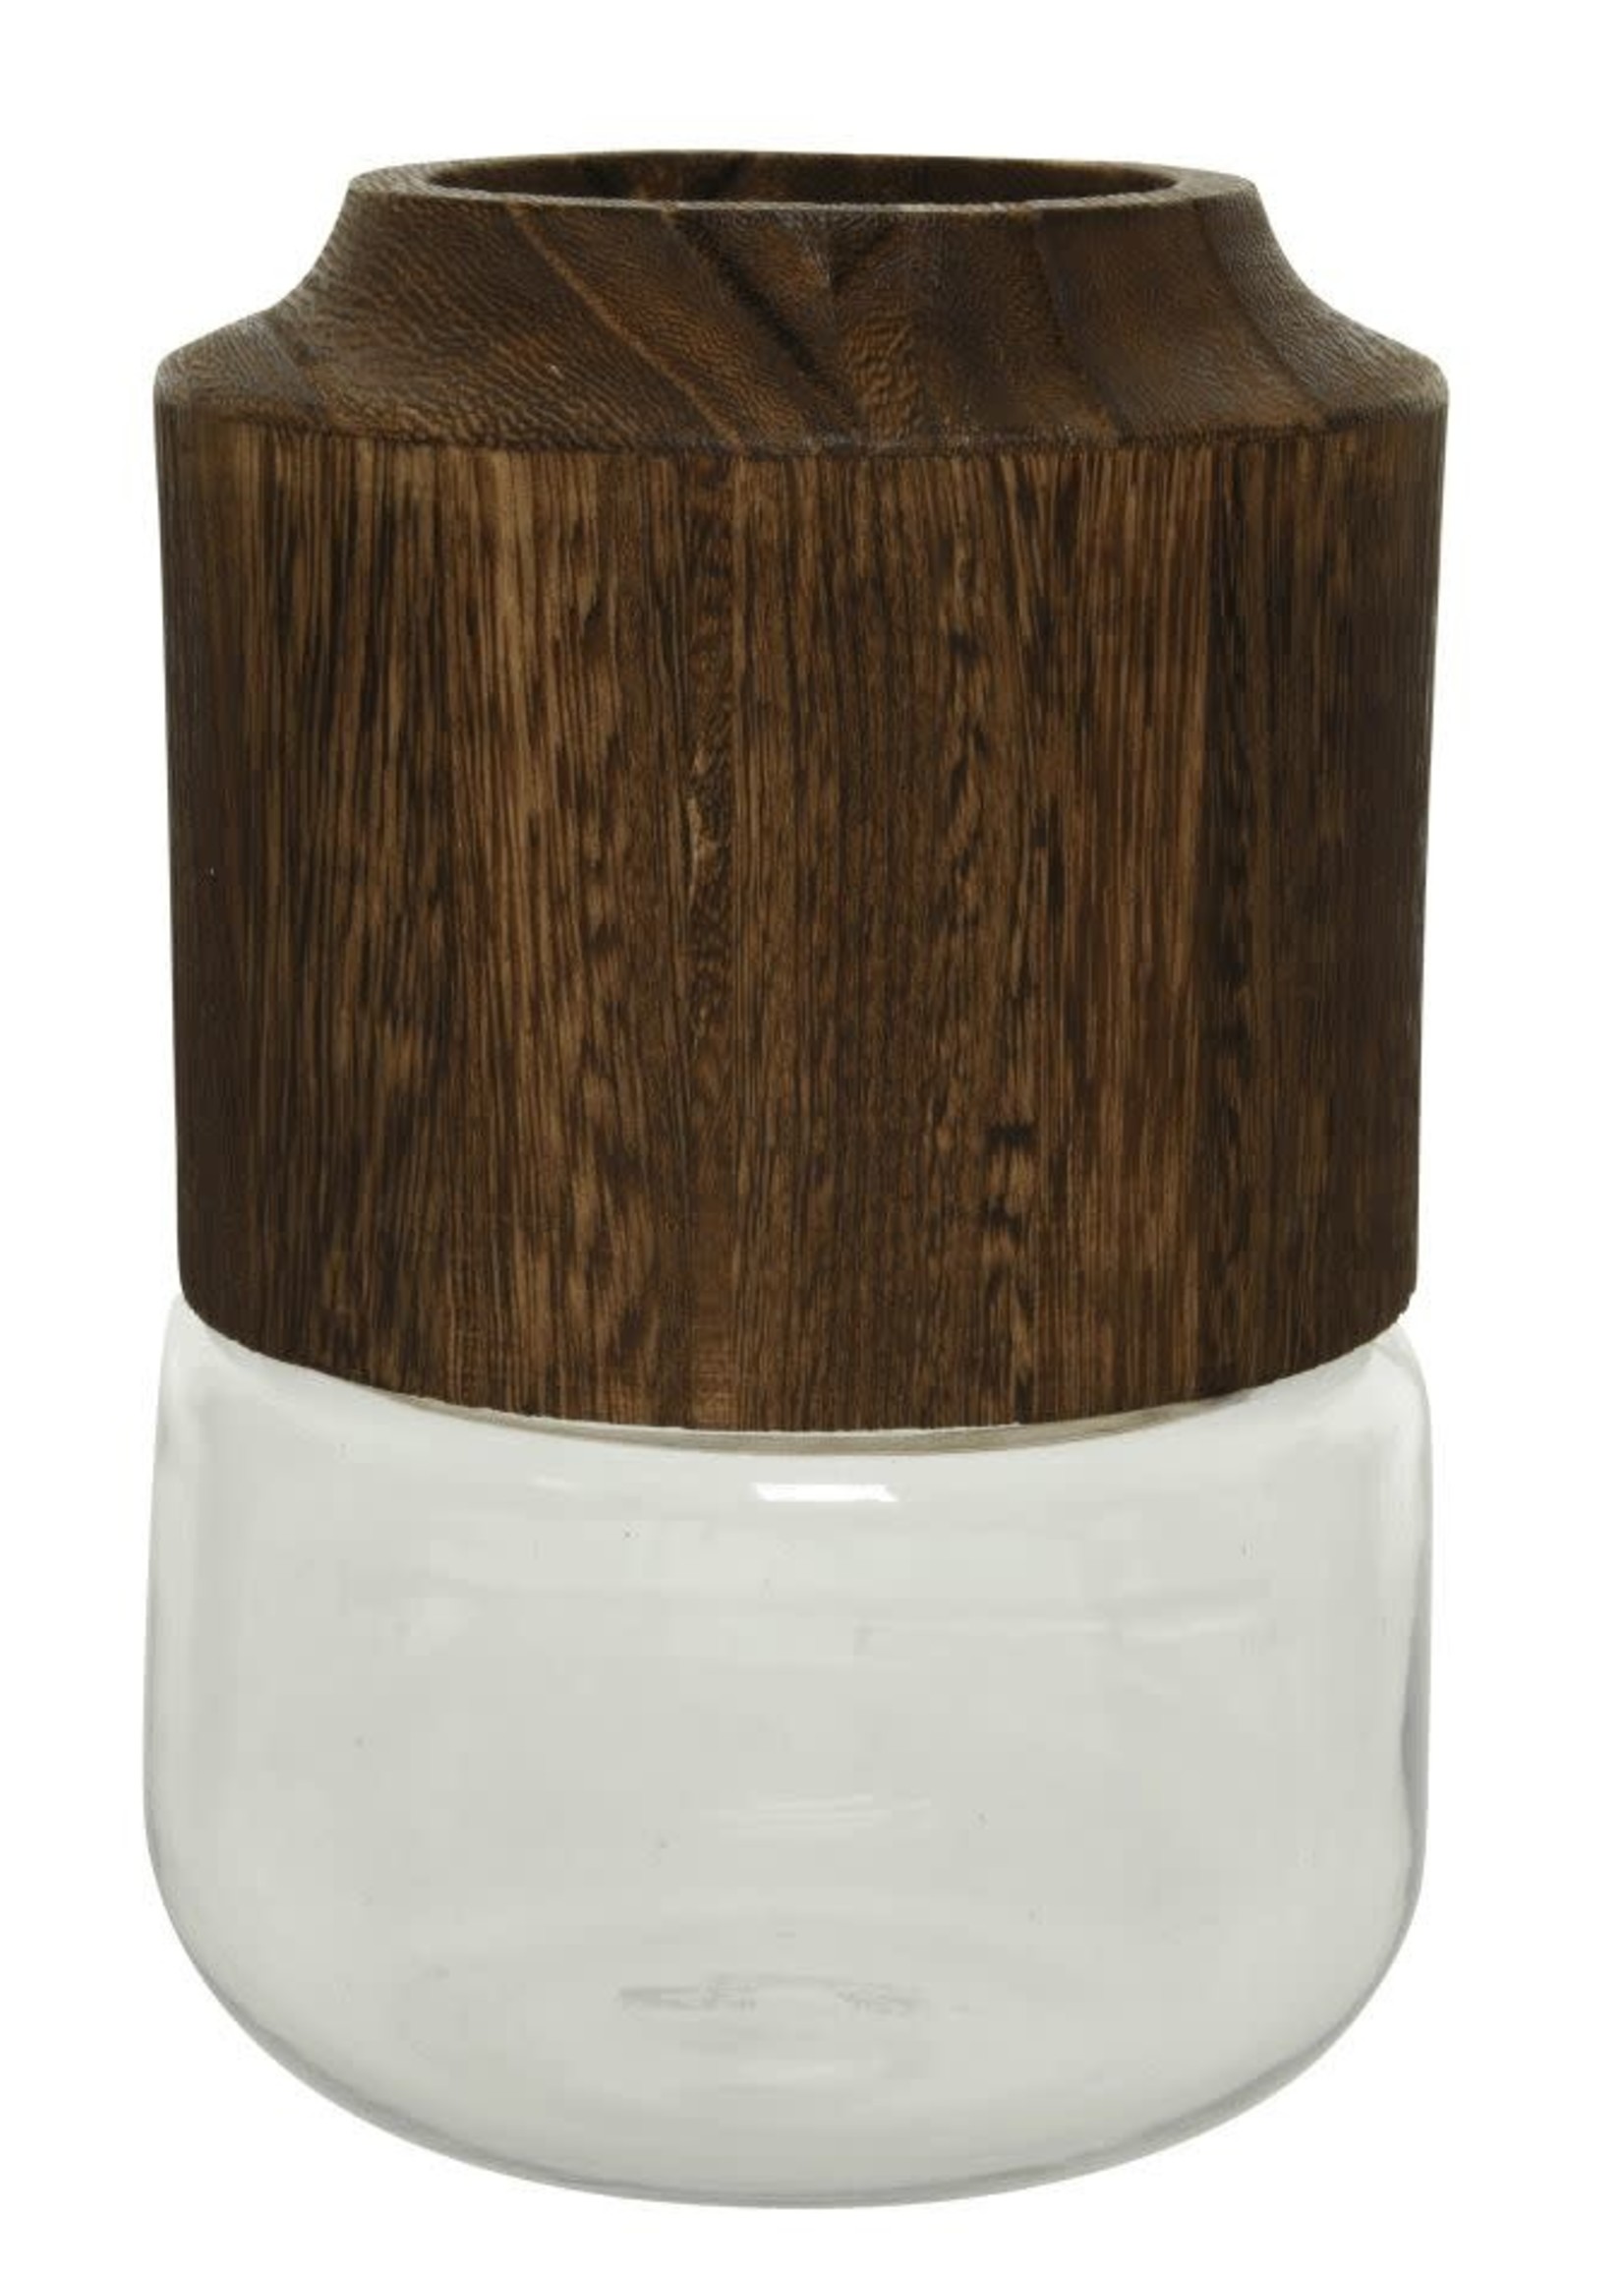 Decoris Decoris Vase - Glass and Wood 32 x 19cm